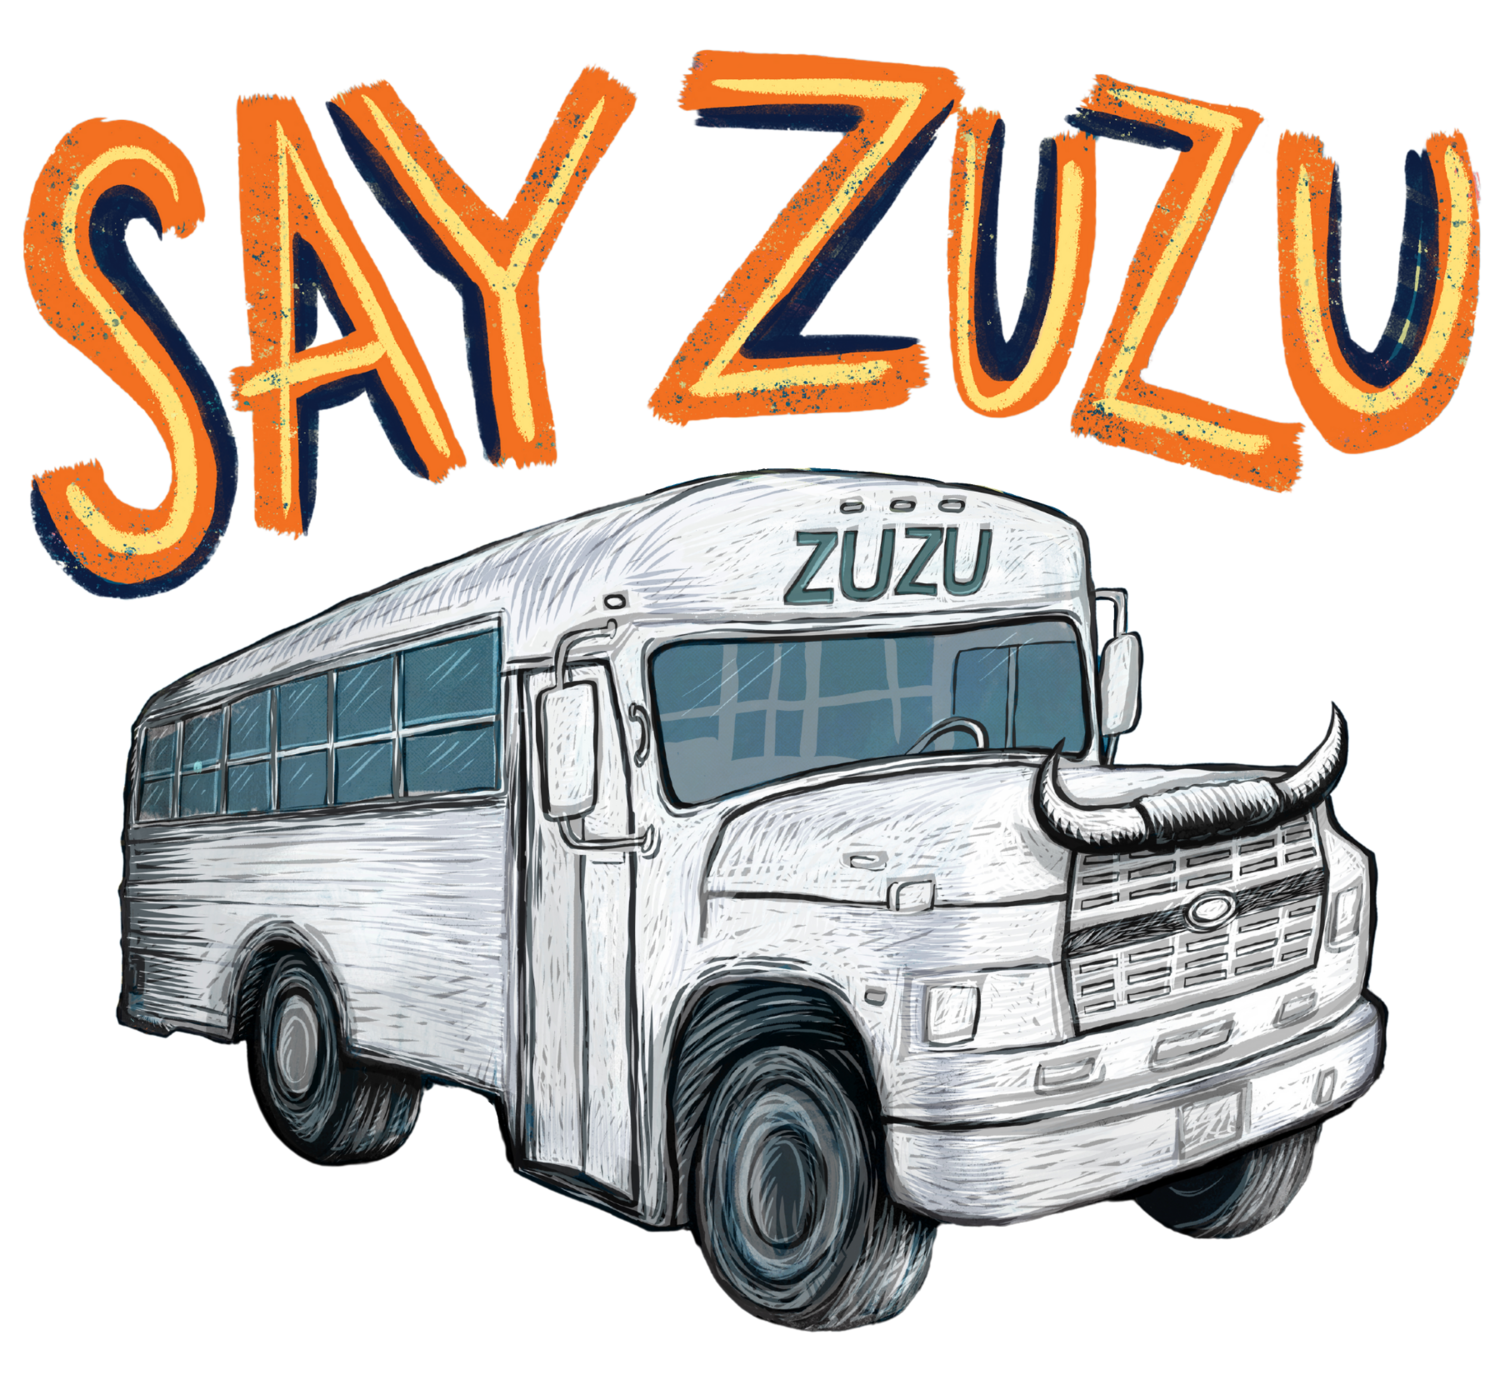 Say Zuzu